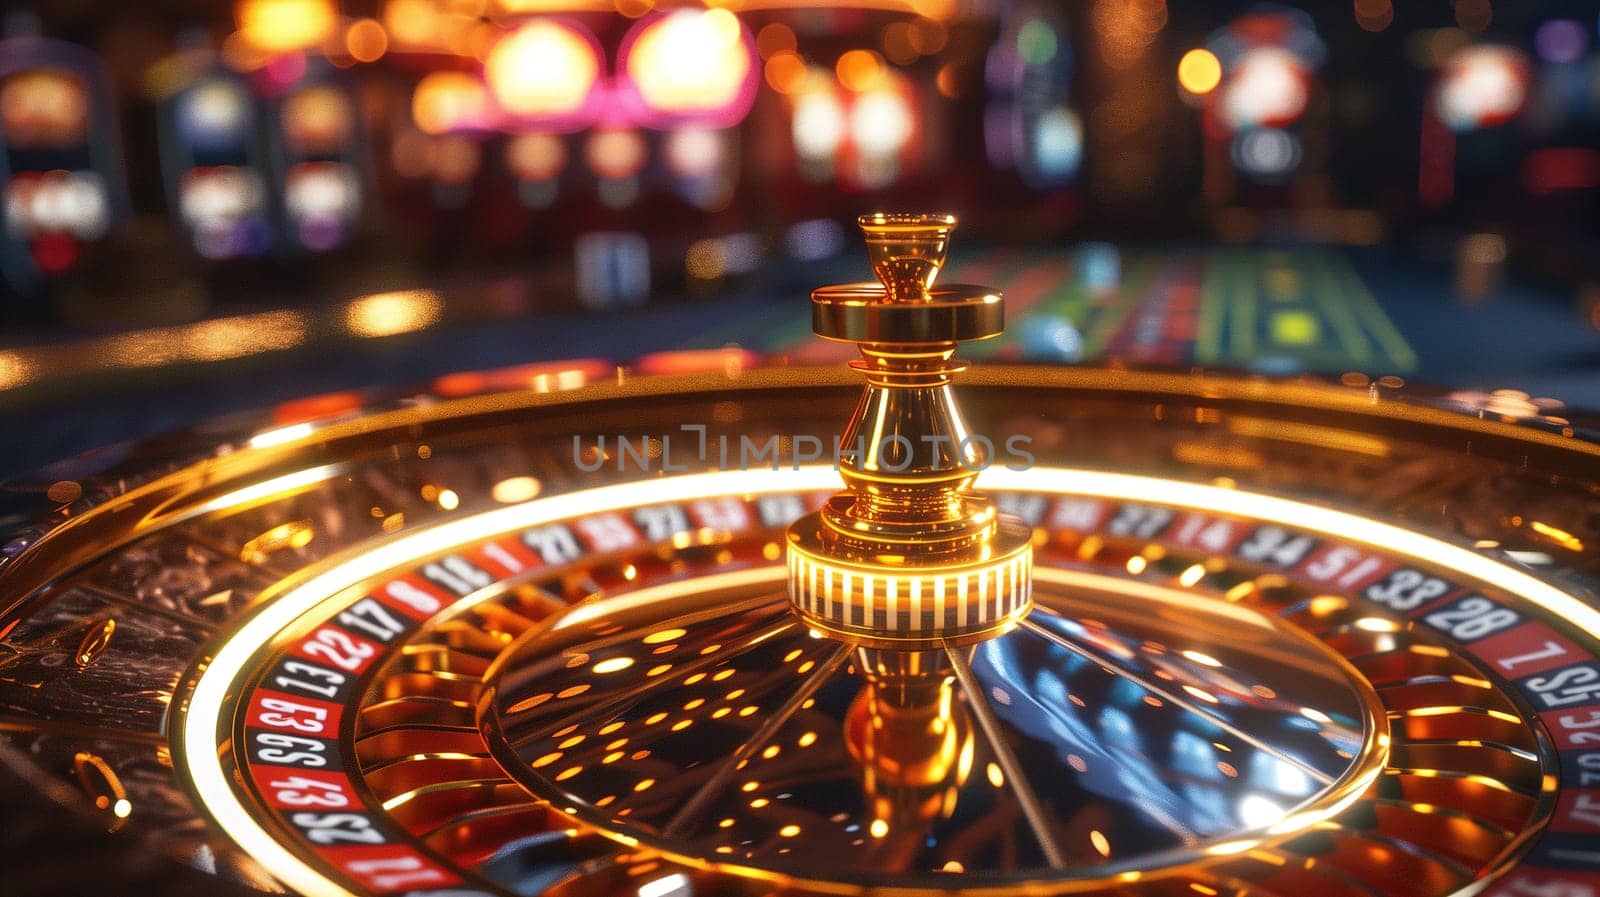 Casino Roulette Wheel in Casino Room by TRMK